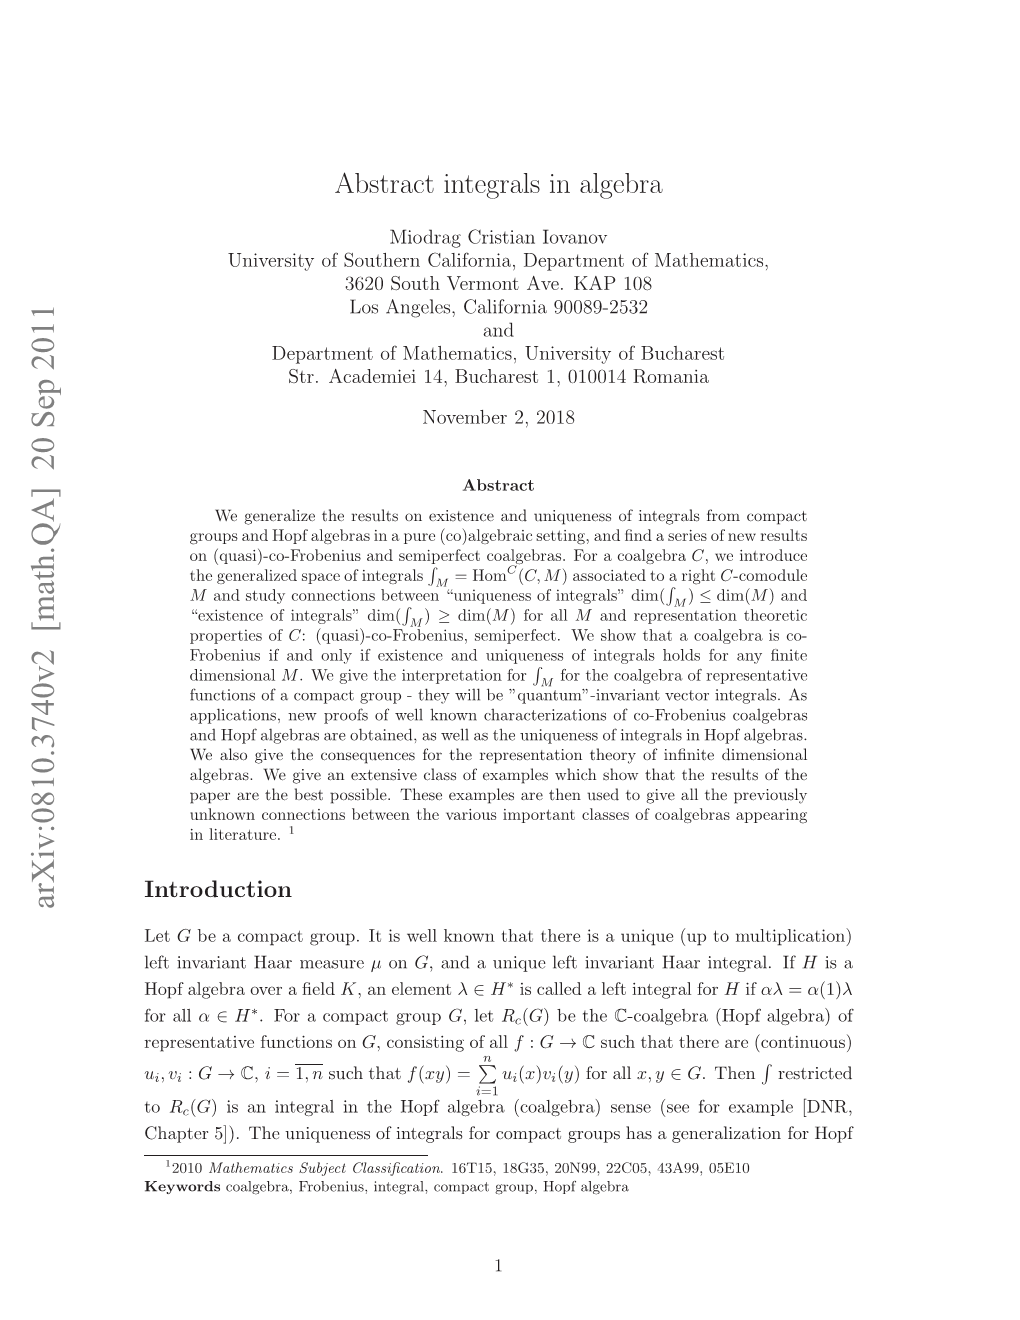 Abstract Integrals in Algebra: Coalgebras, Hopf Algebras and Compact Groups